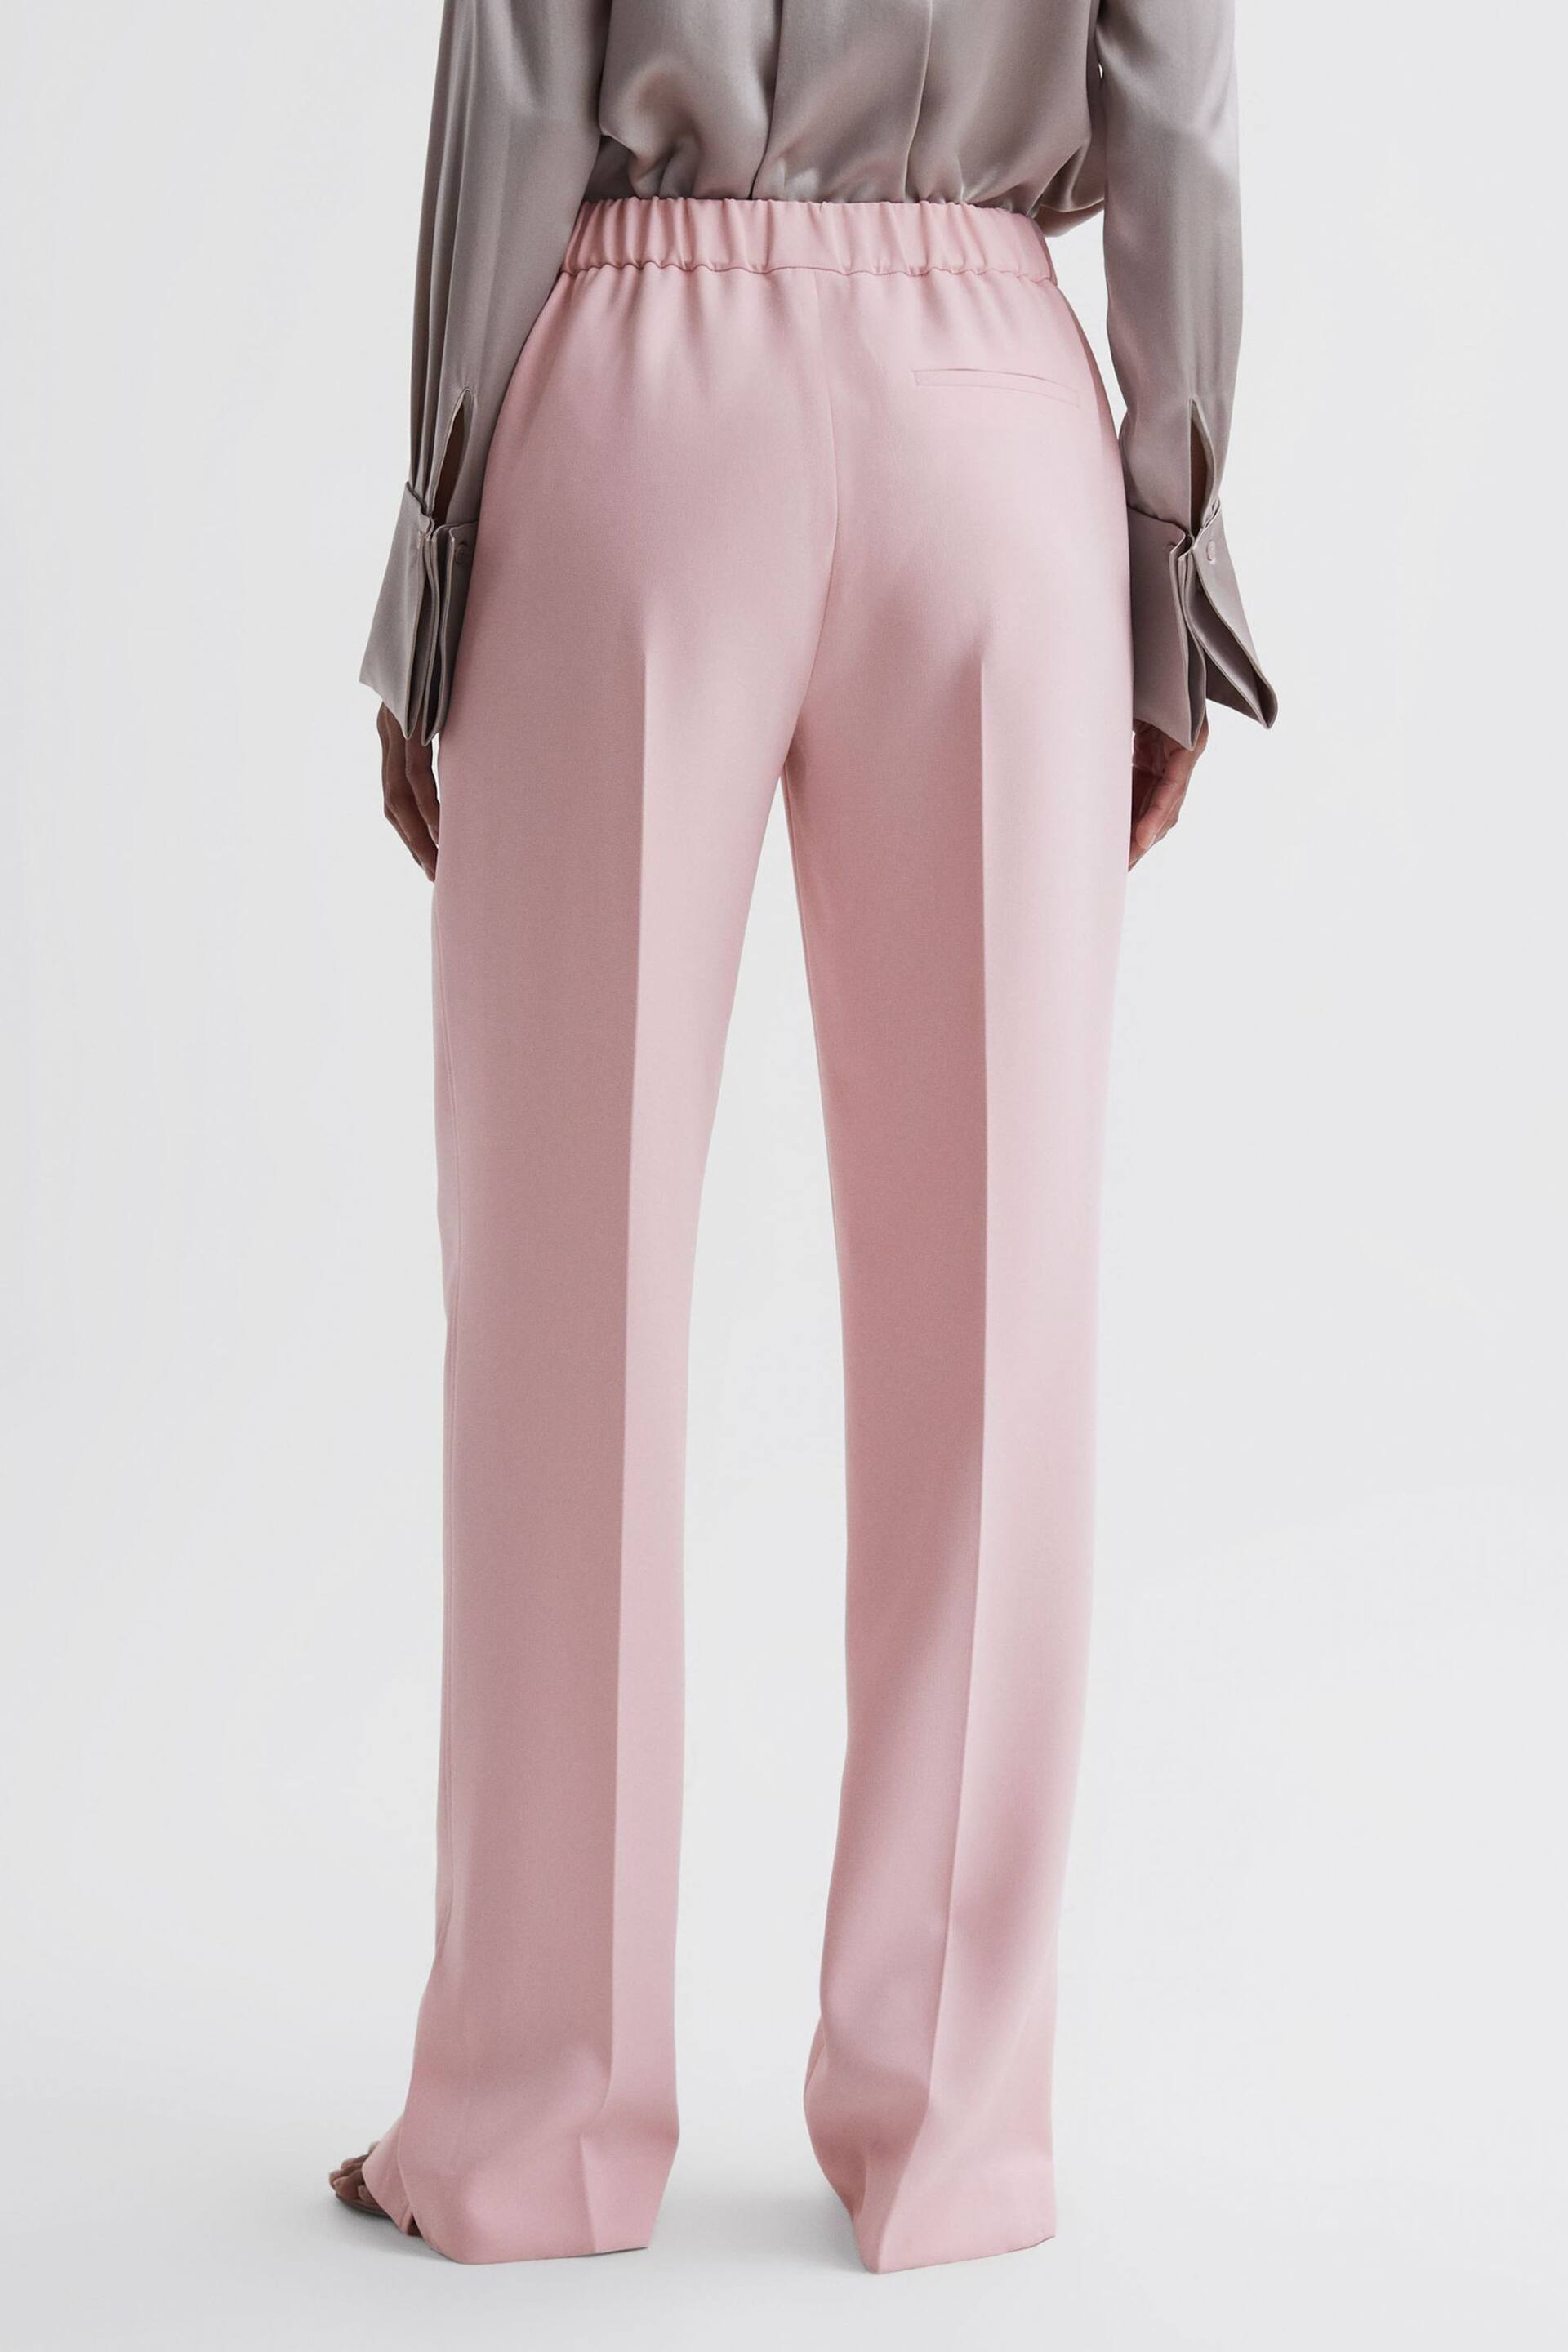 Reiss Pink Marina Petite Wide Leg Split Hem Trousers - Image 5 of 6